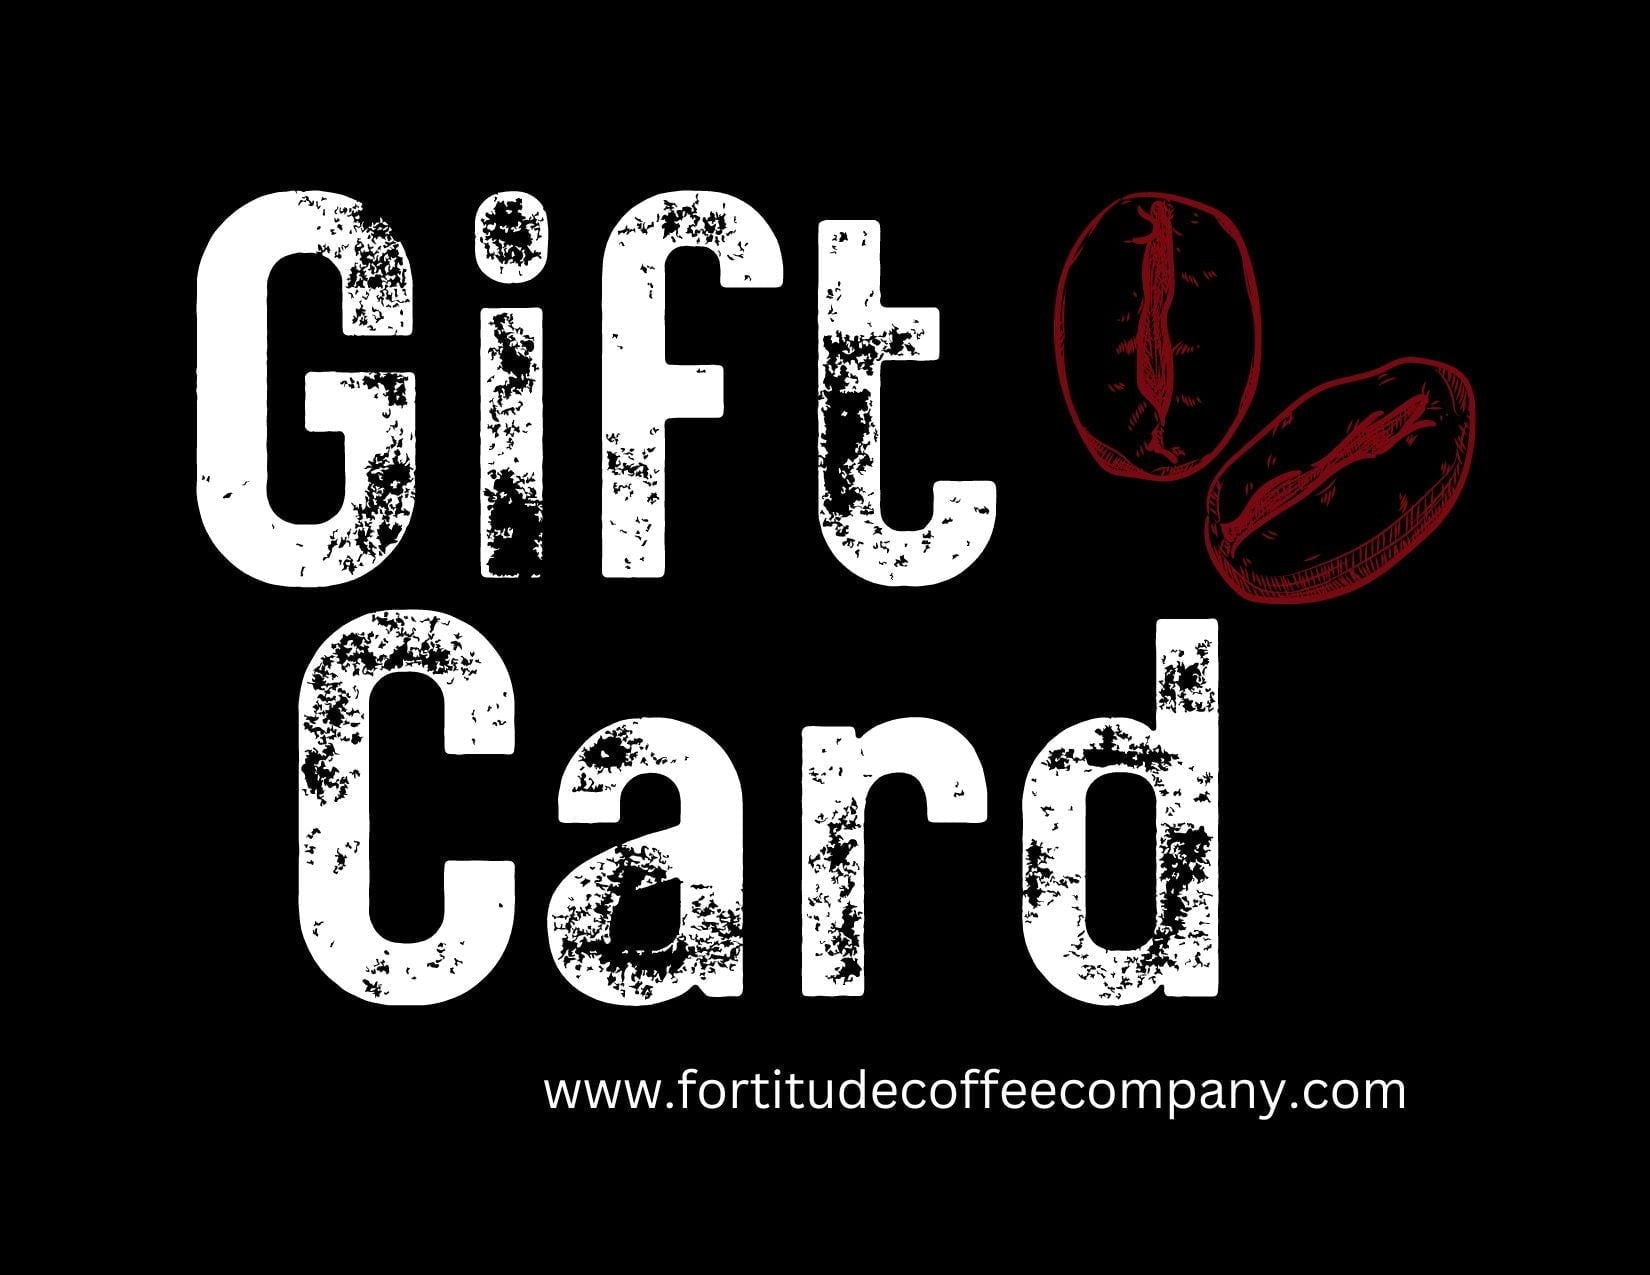 eGift Card - Fortitude Coffee Co